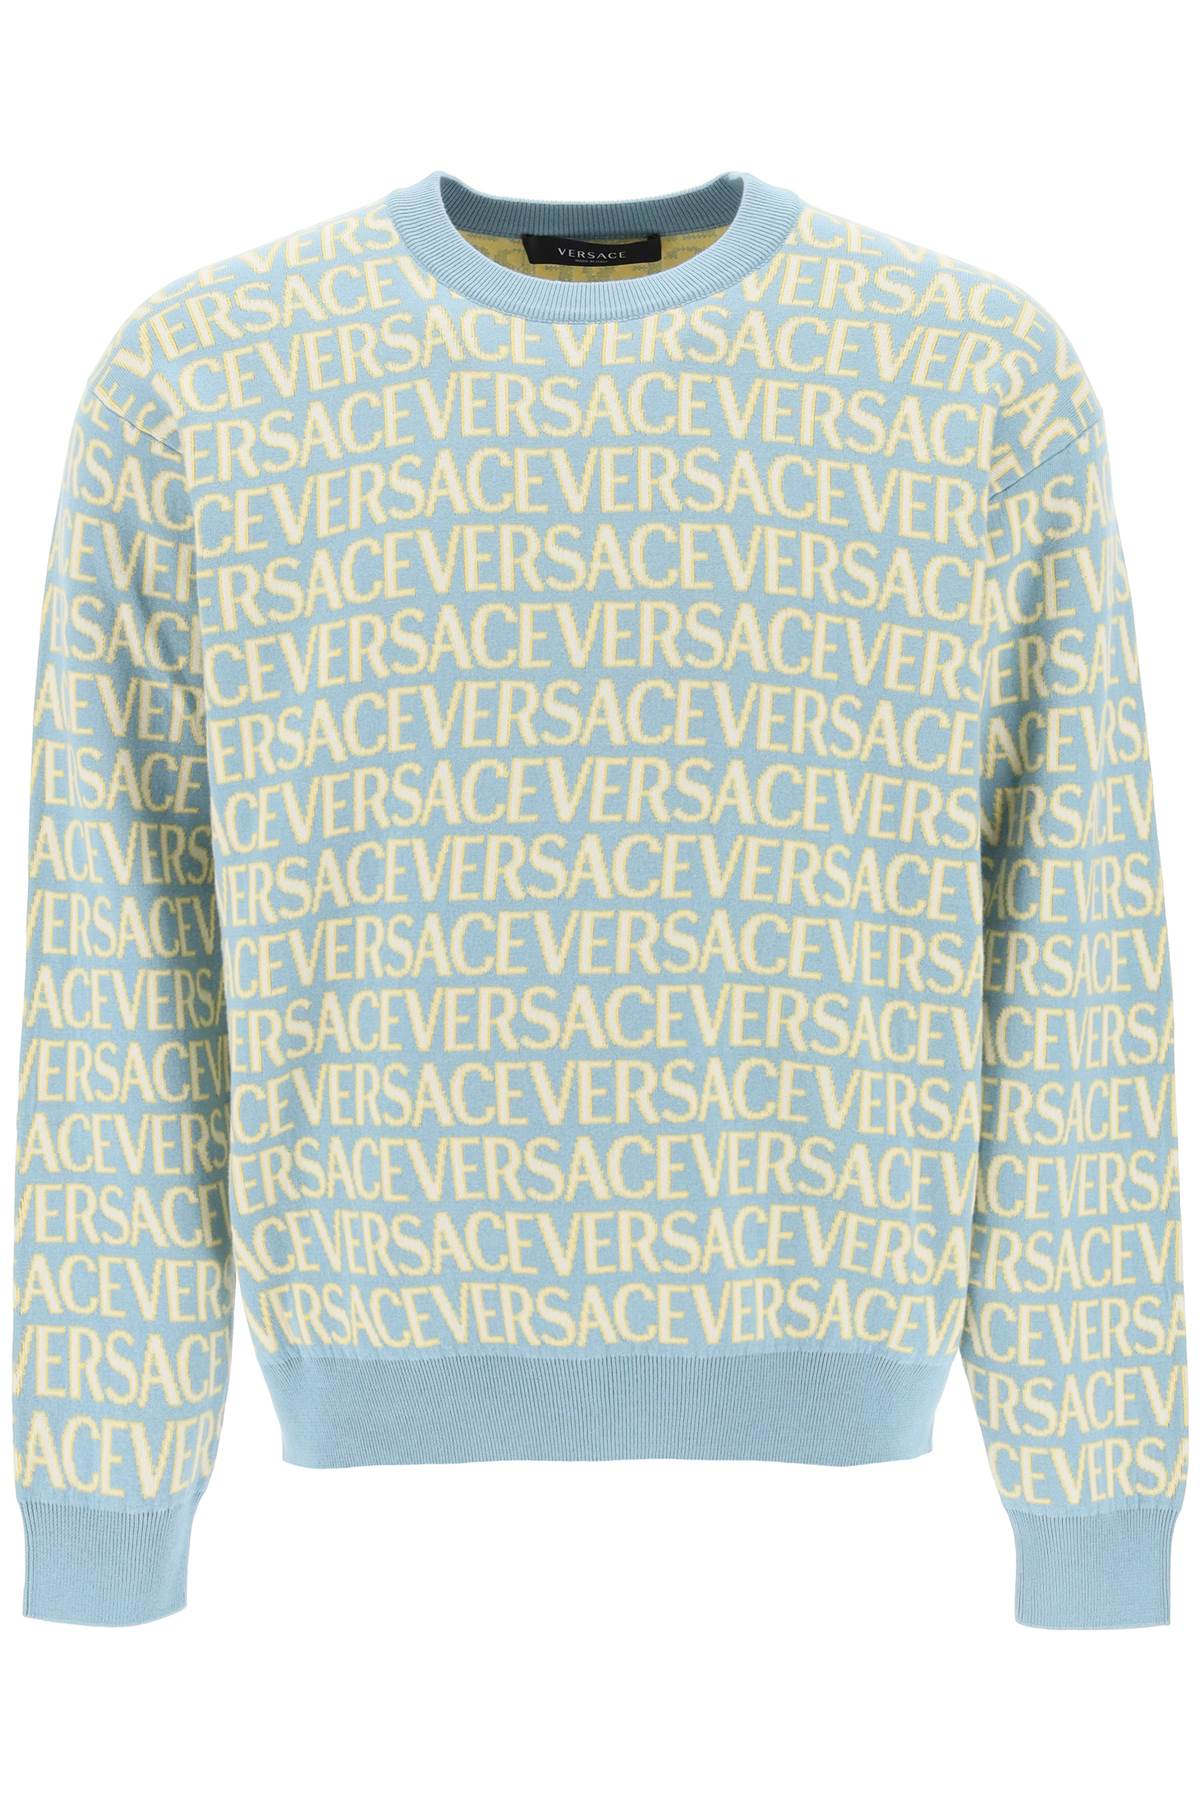 Versace Versace monogram cotton sweater